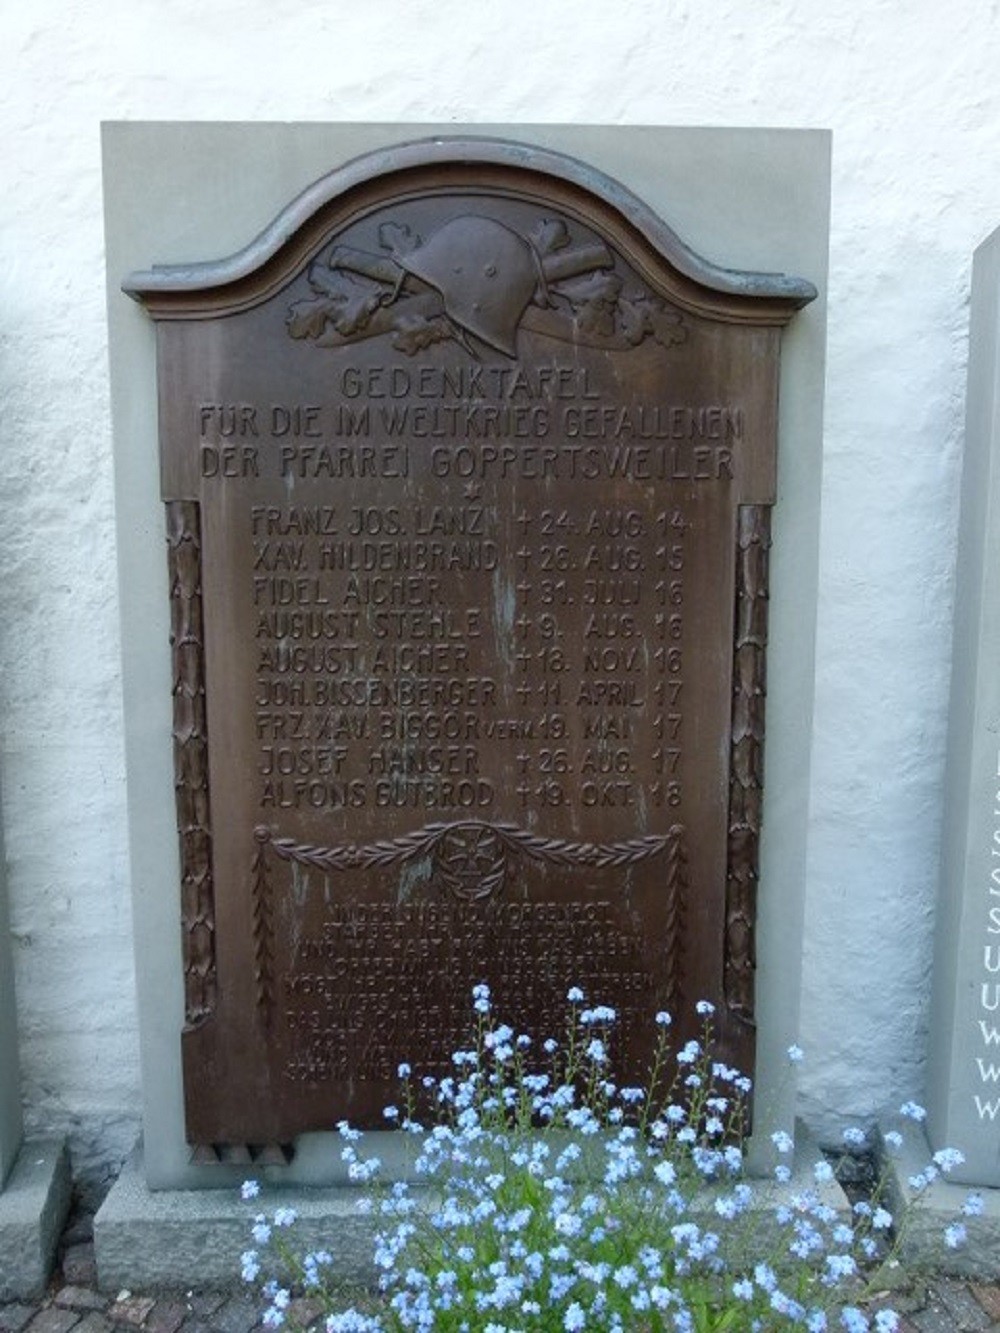 Monument To The Fallen In World War I And World War II Goppertsweiler #2